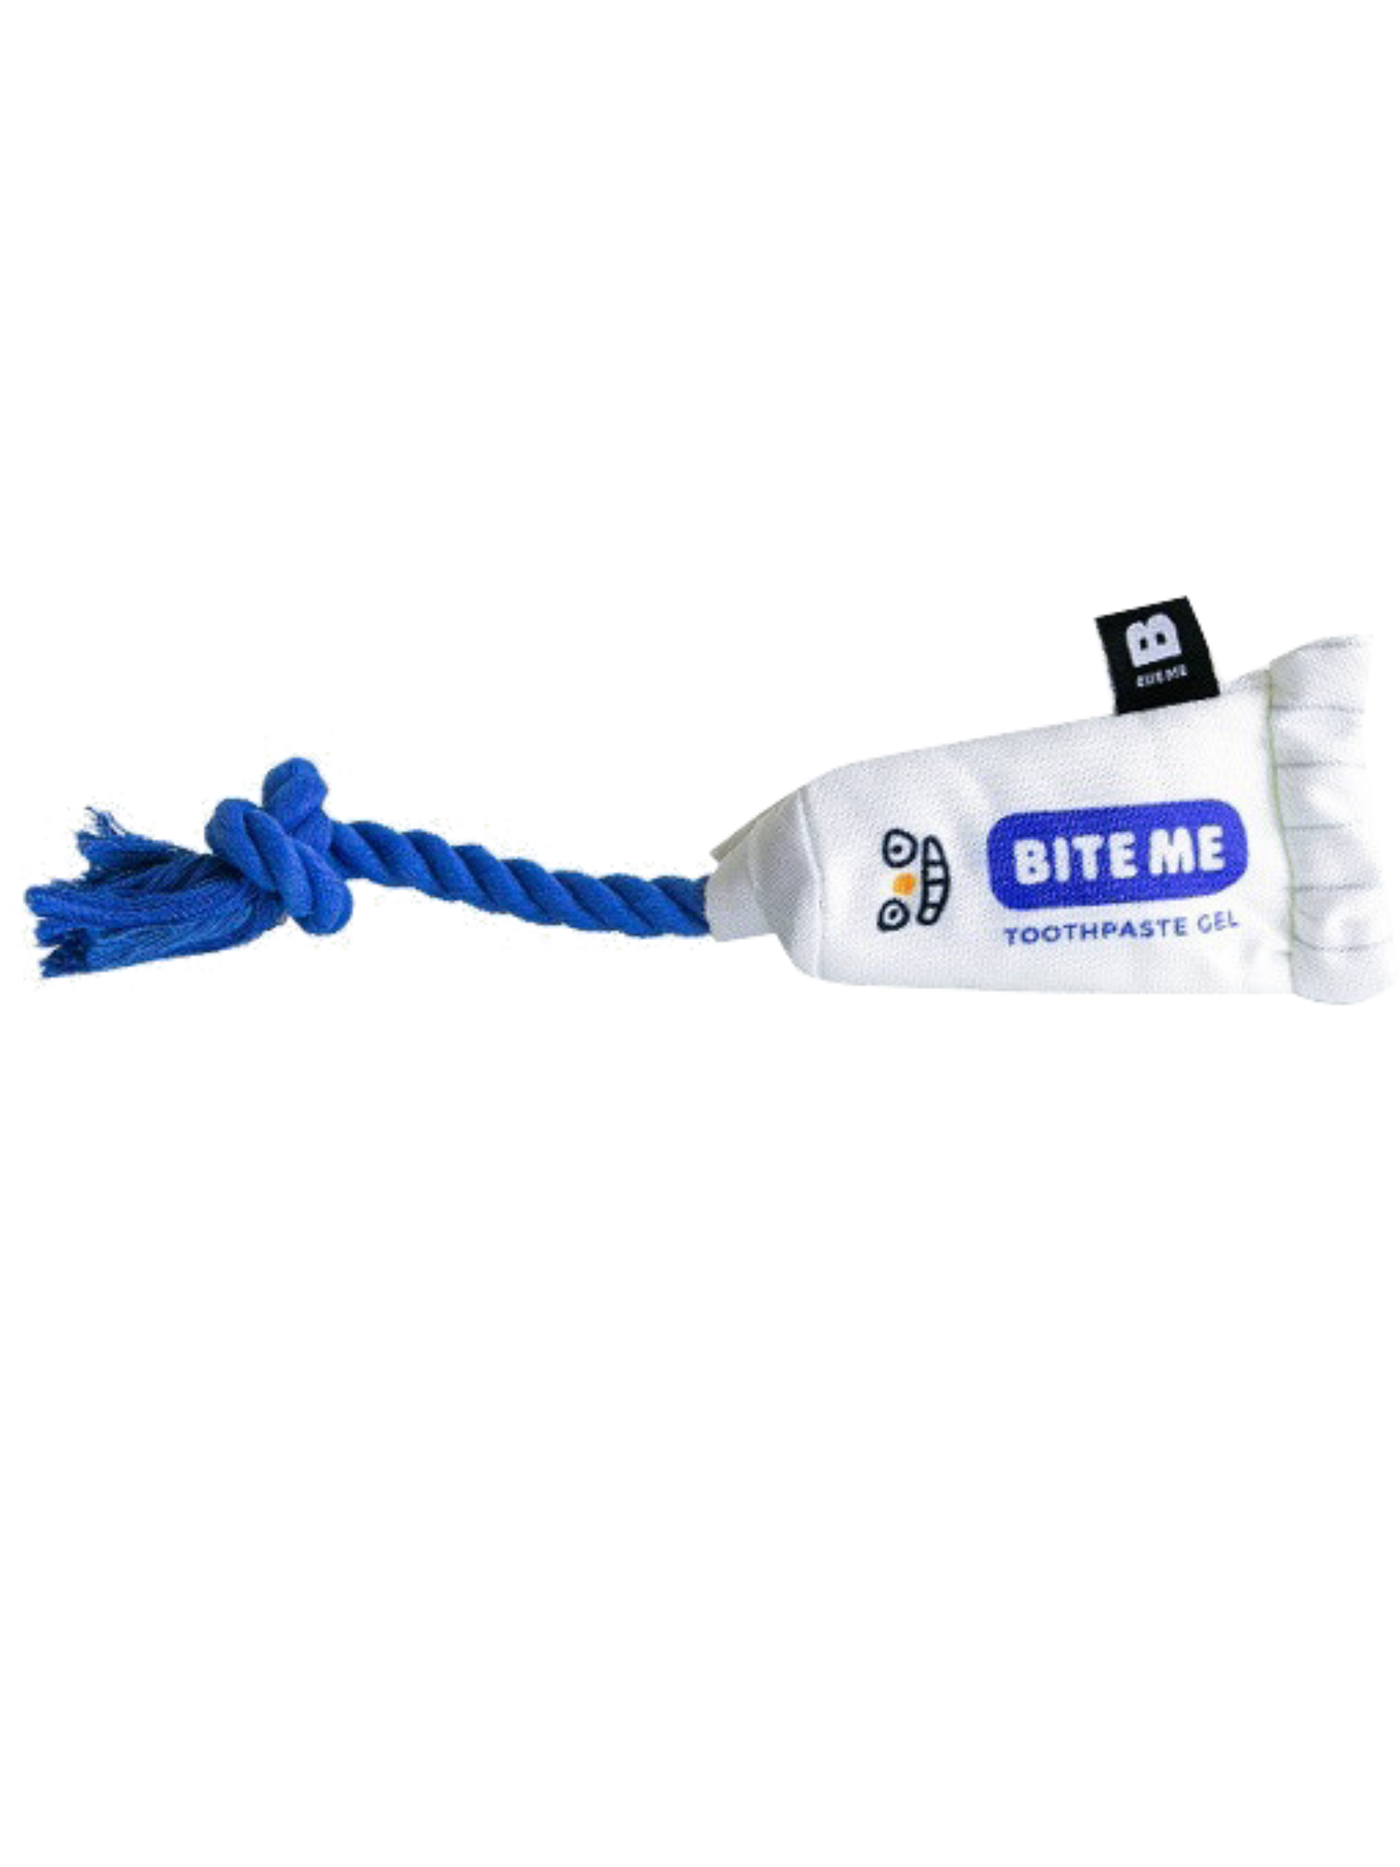 Biteme | 韓國精品牙膏造型拉扯玩具